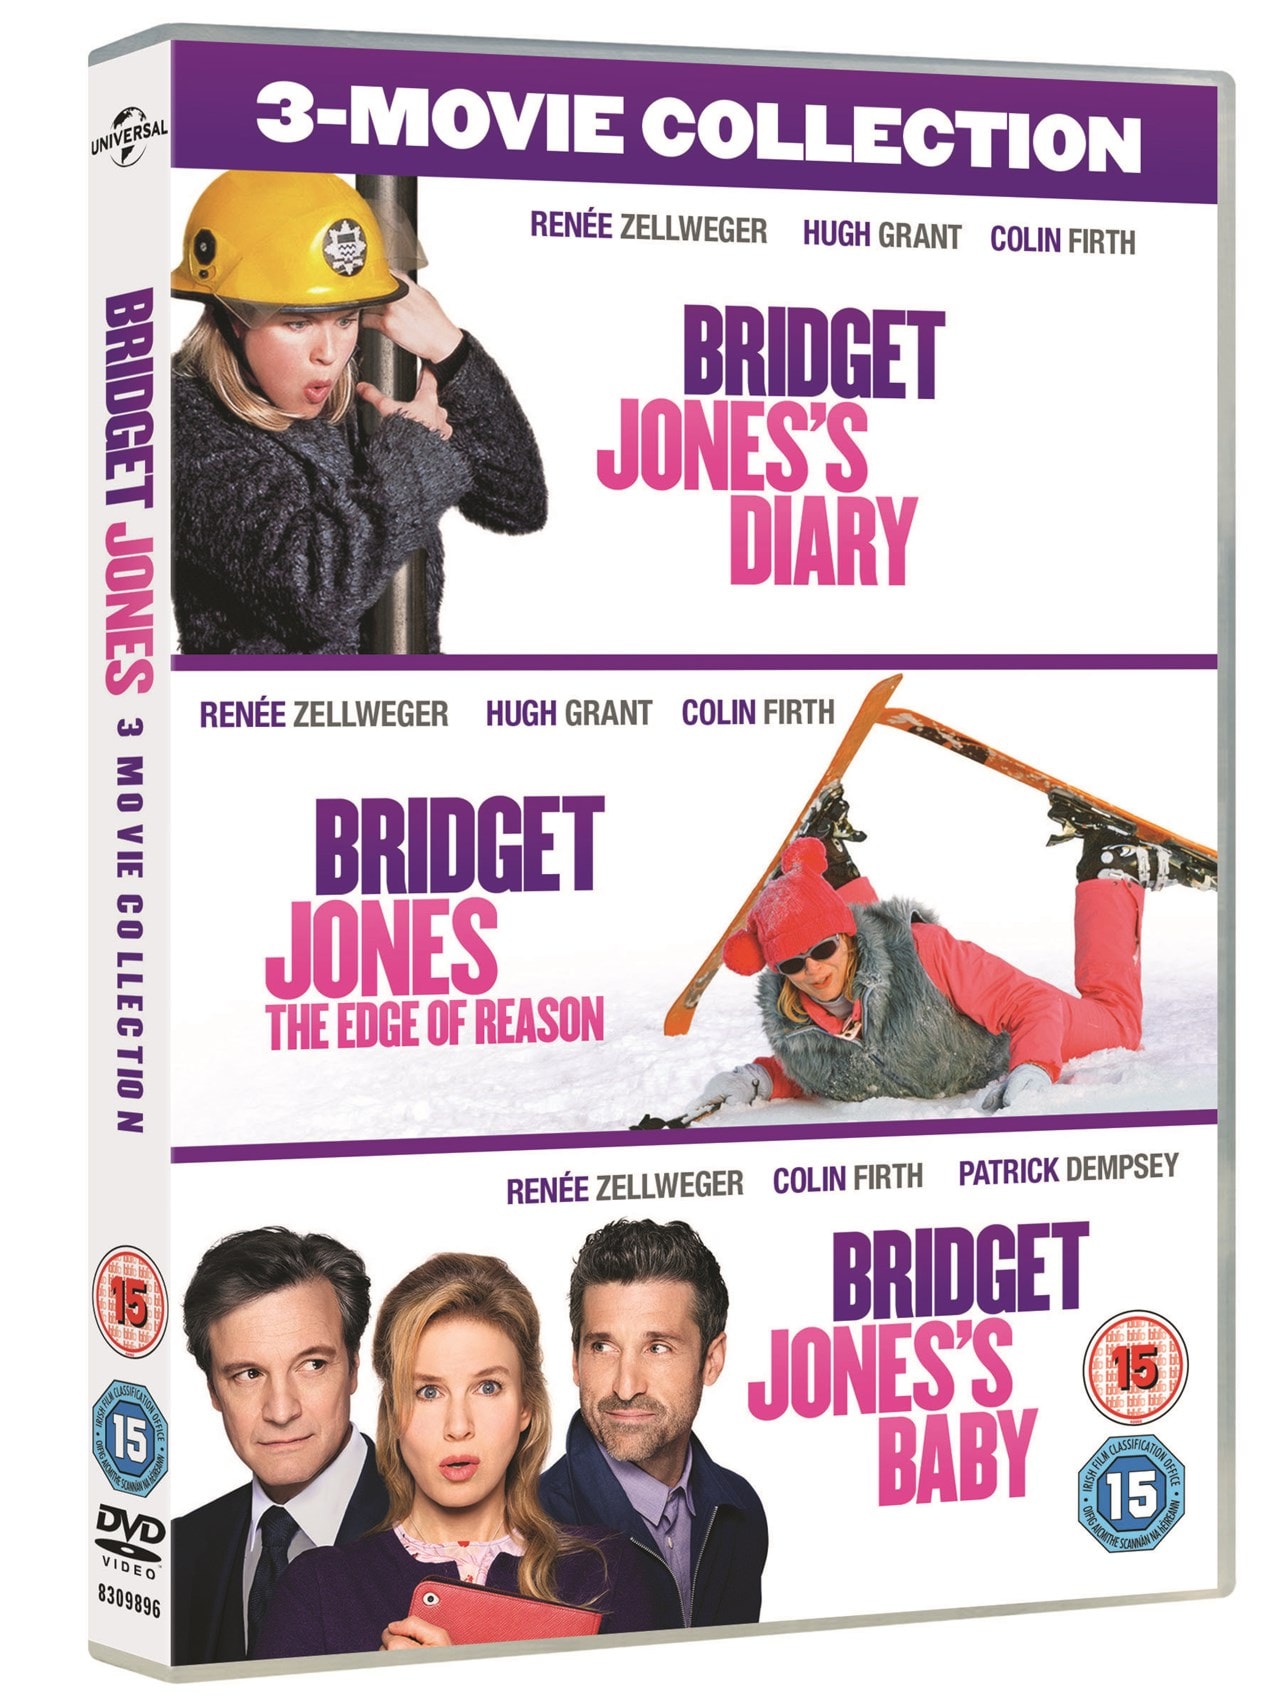 Bridget Jones S Diary The Edge Of Reason Bridget Jones S Baby Dvd Box Set Free Shipping Over Hmv Store